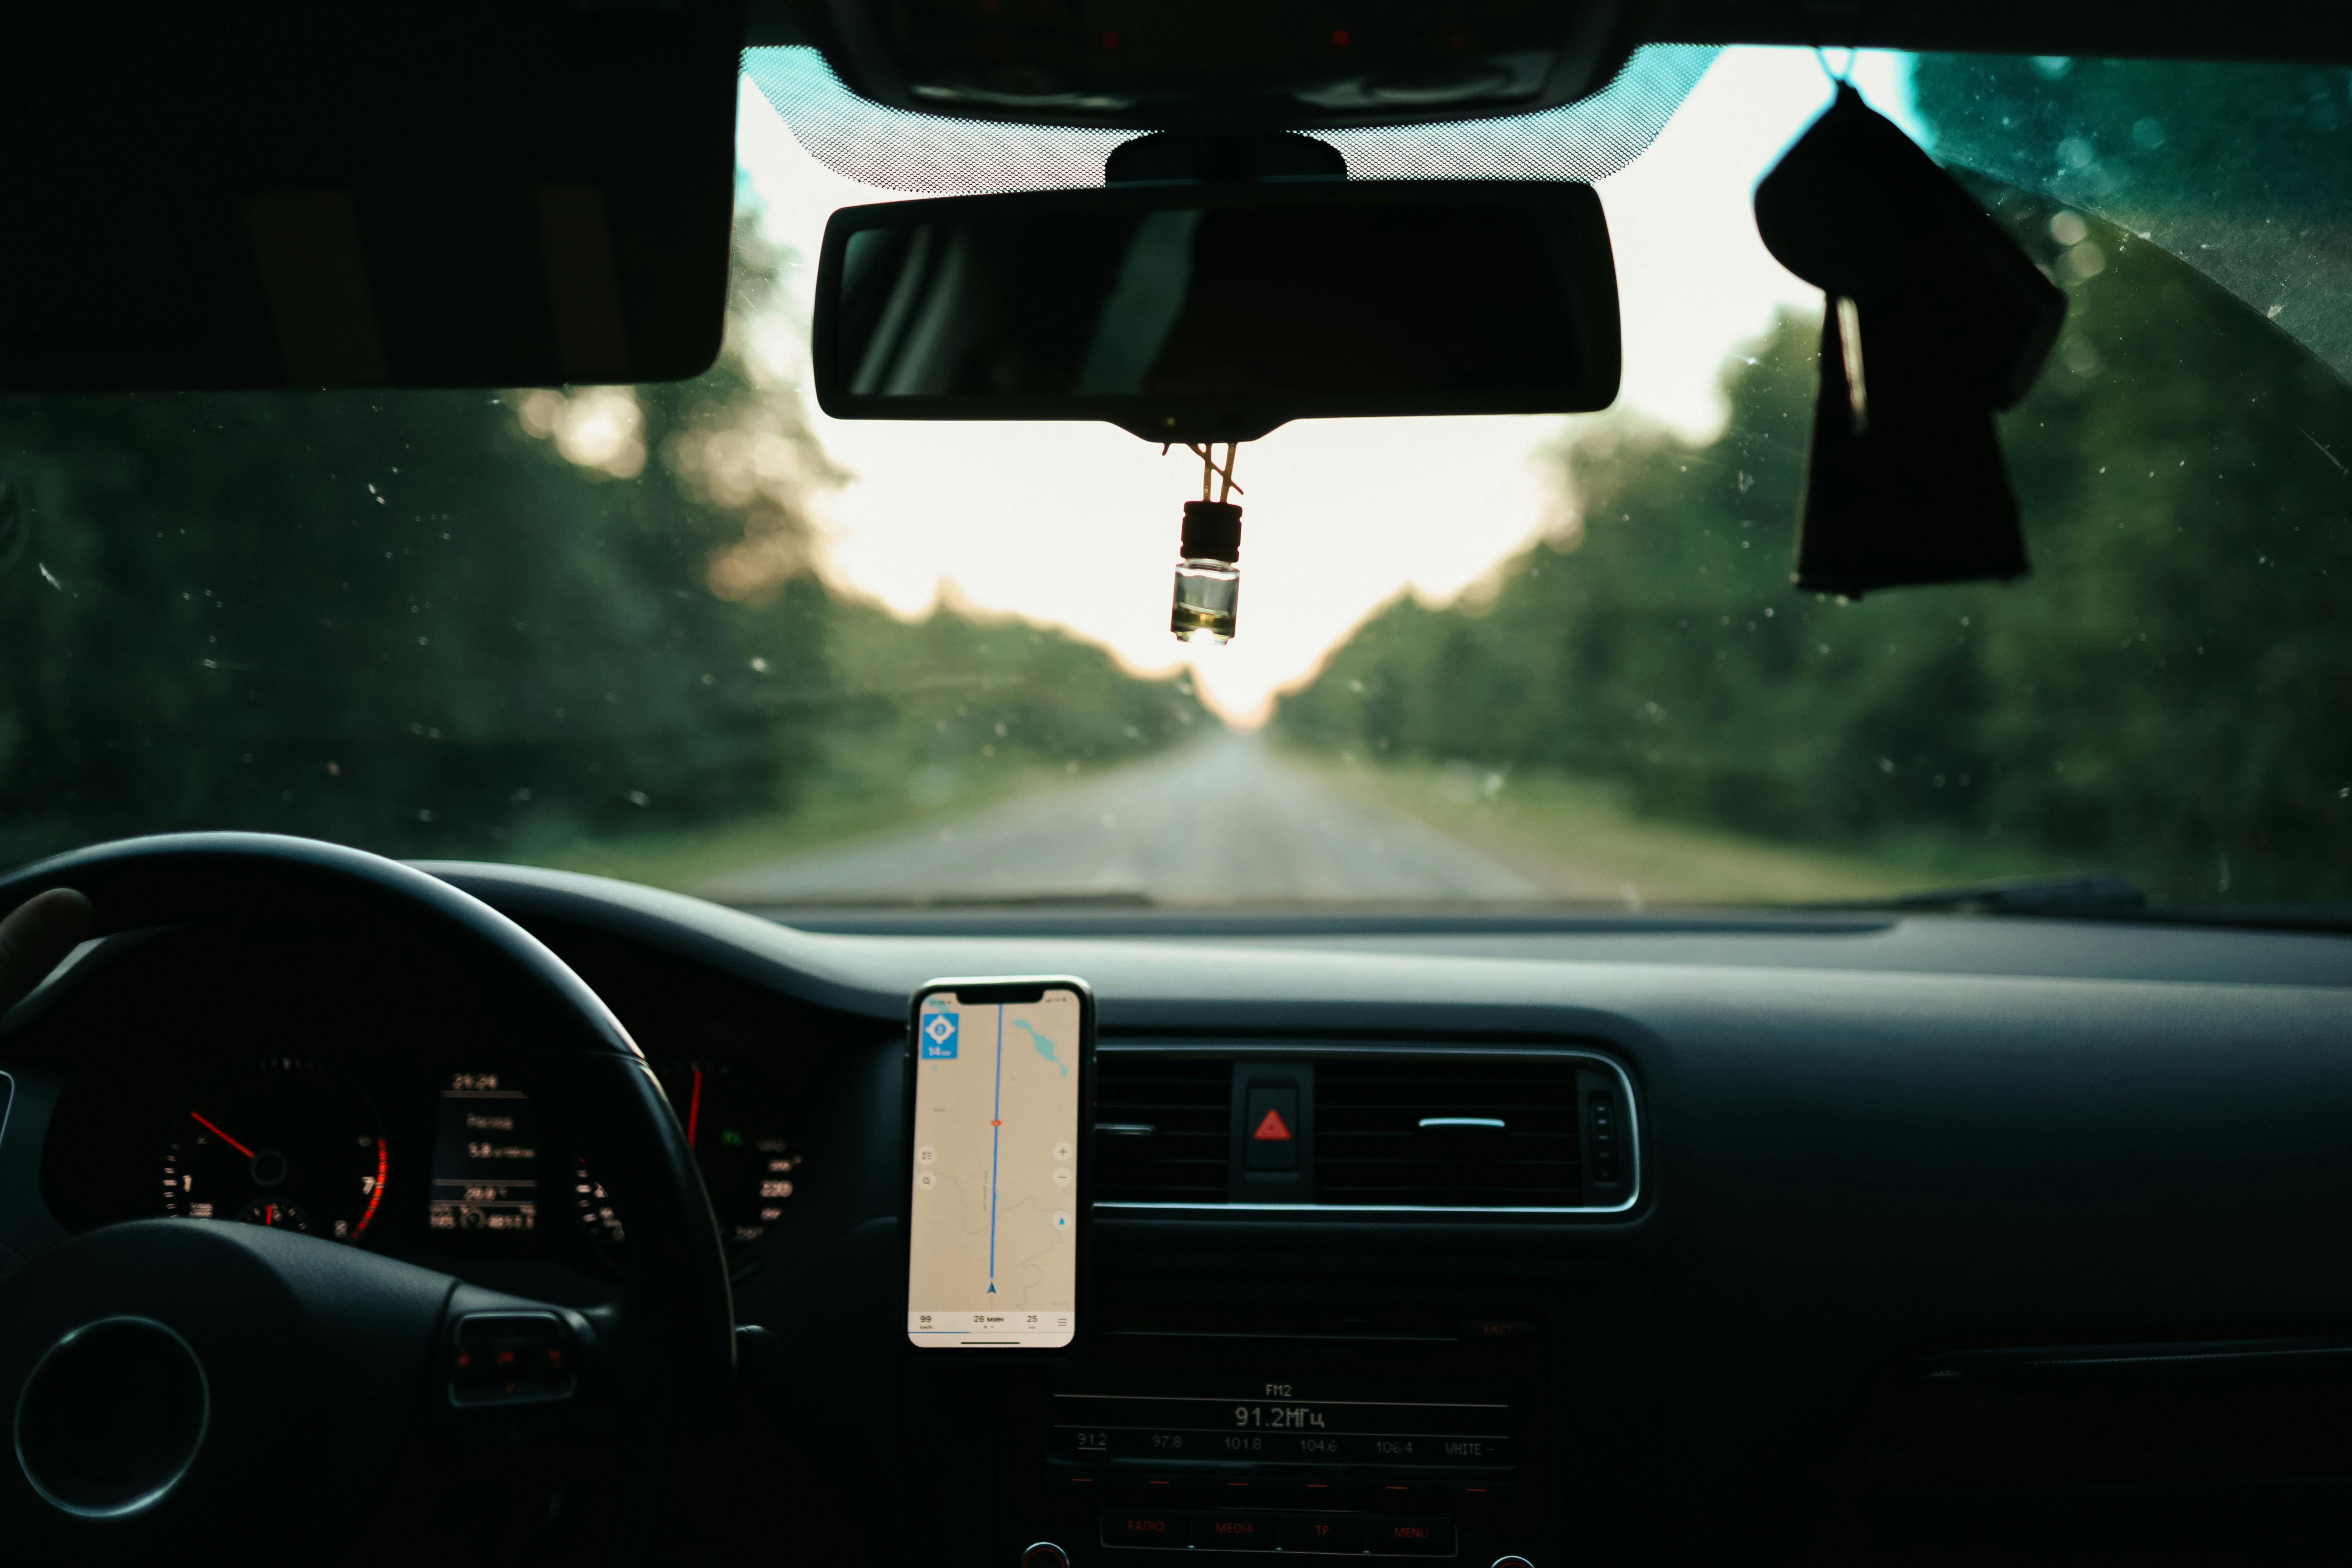 a cellphone on a holder inside the car